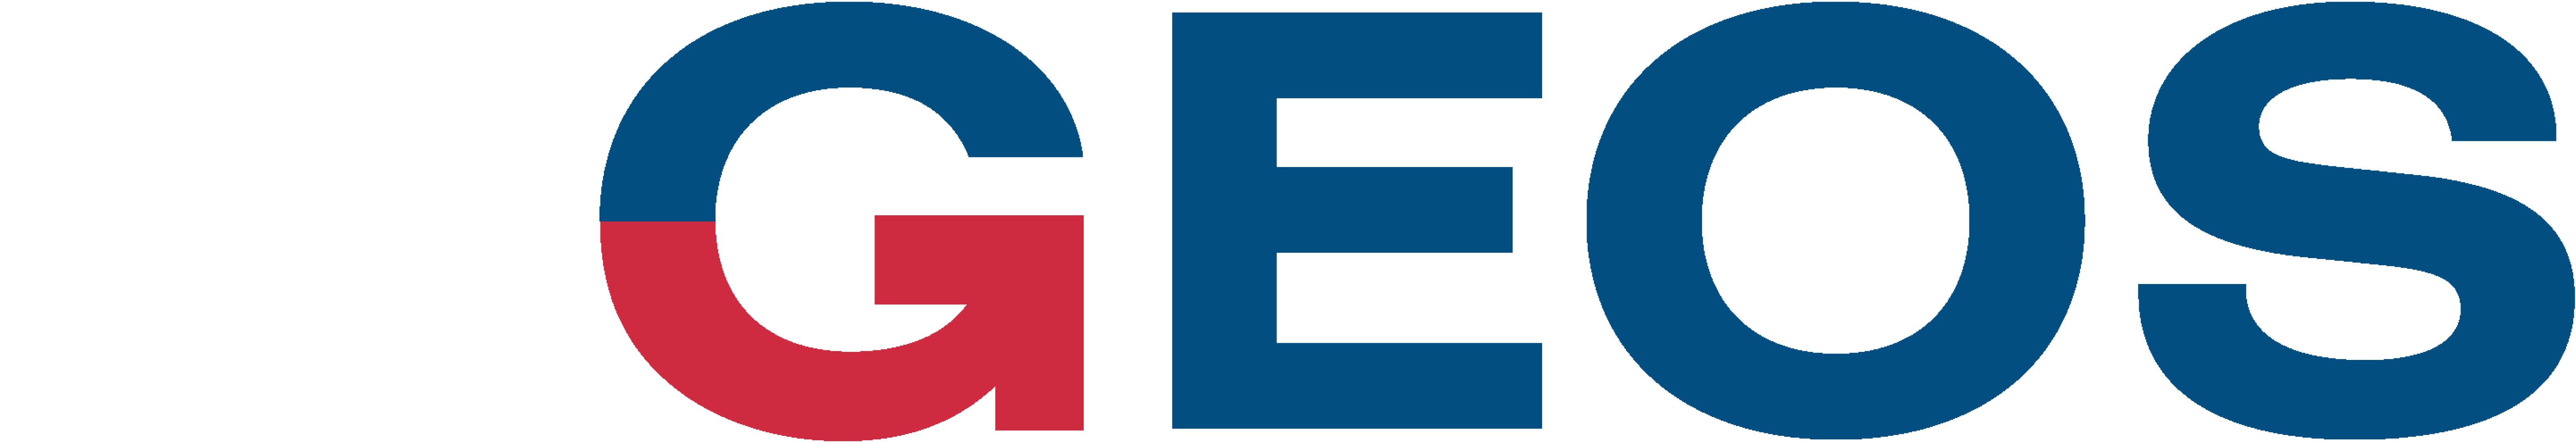 logo Geos securities processing software